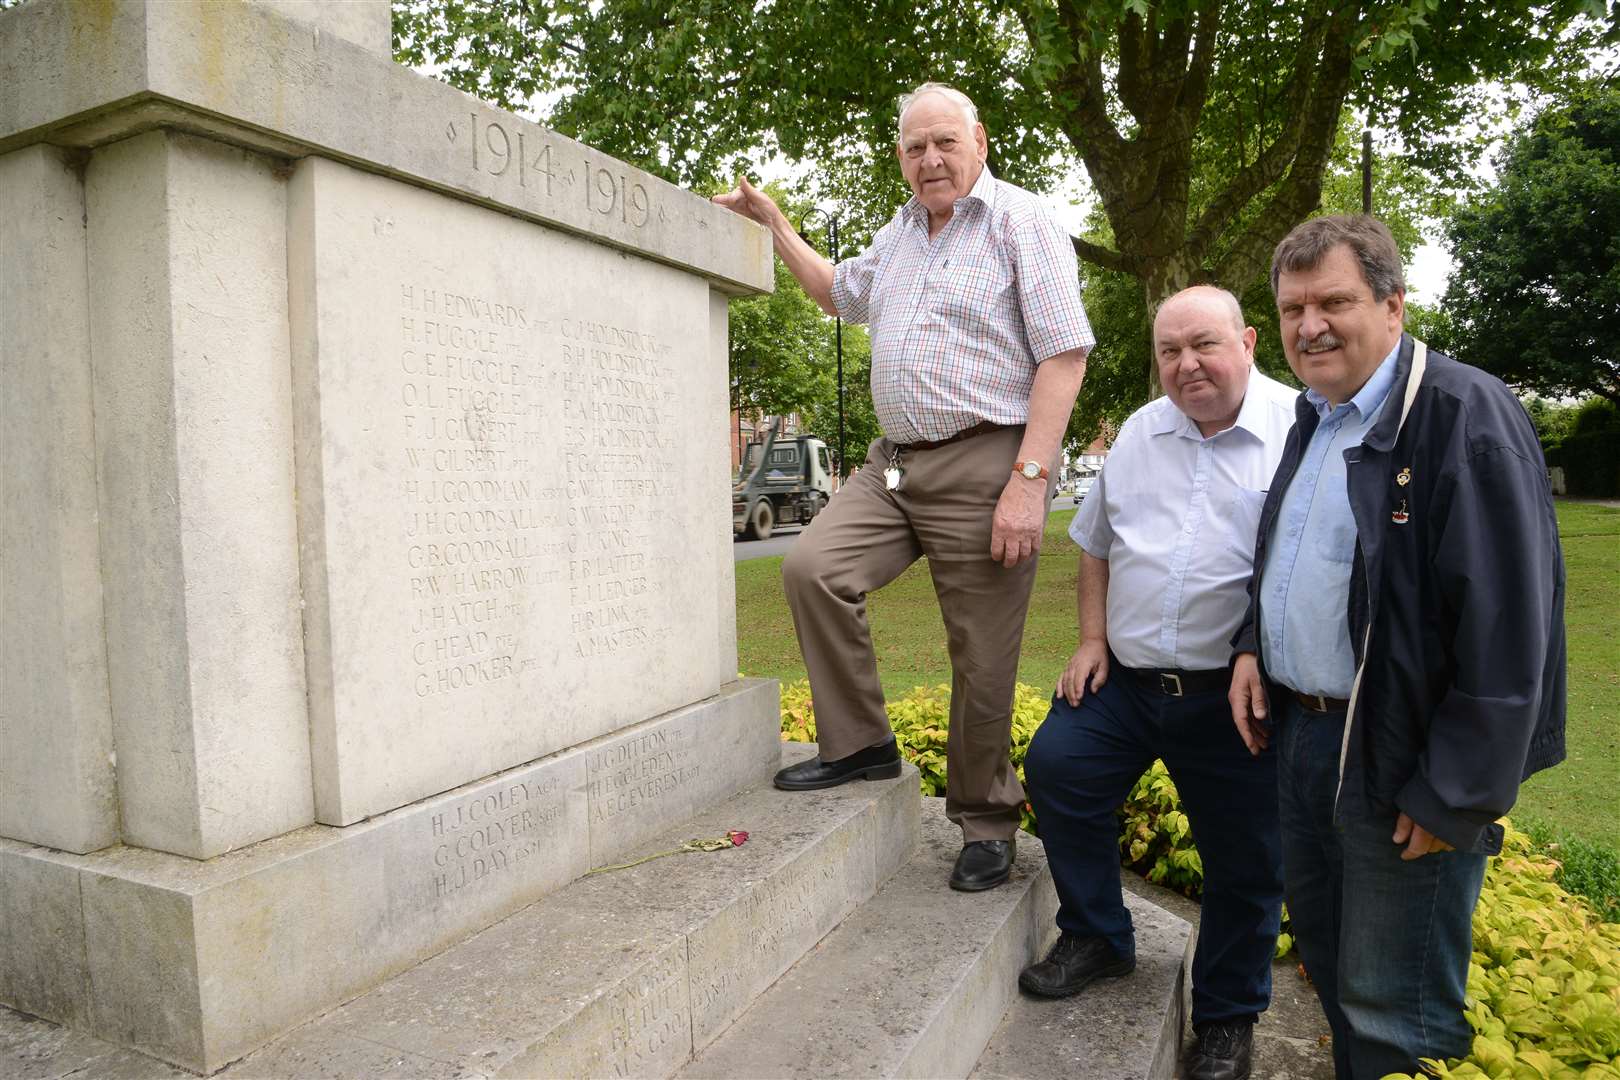 Royal British Legion members, Stanley Goodsall, Neil Beaven and Bill Chantler at Tenterden War Memorial